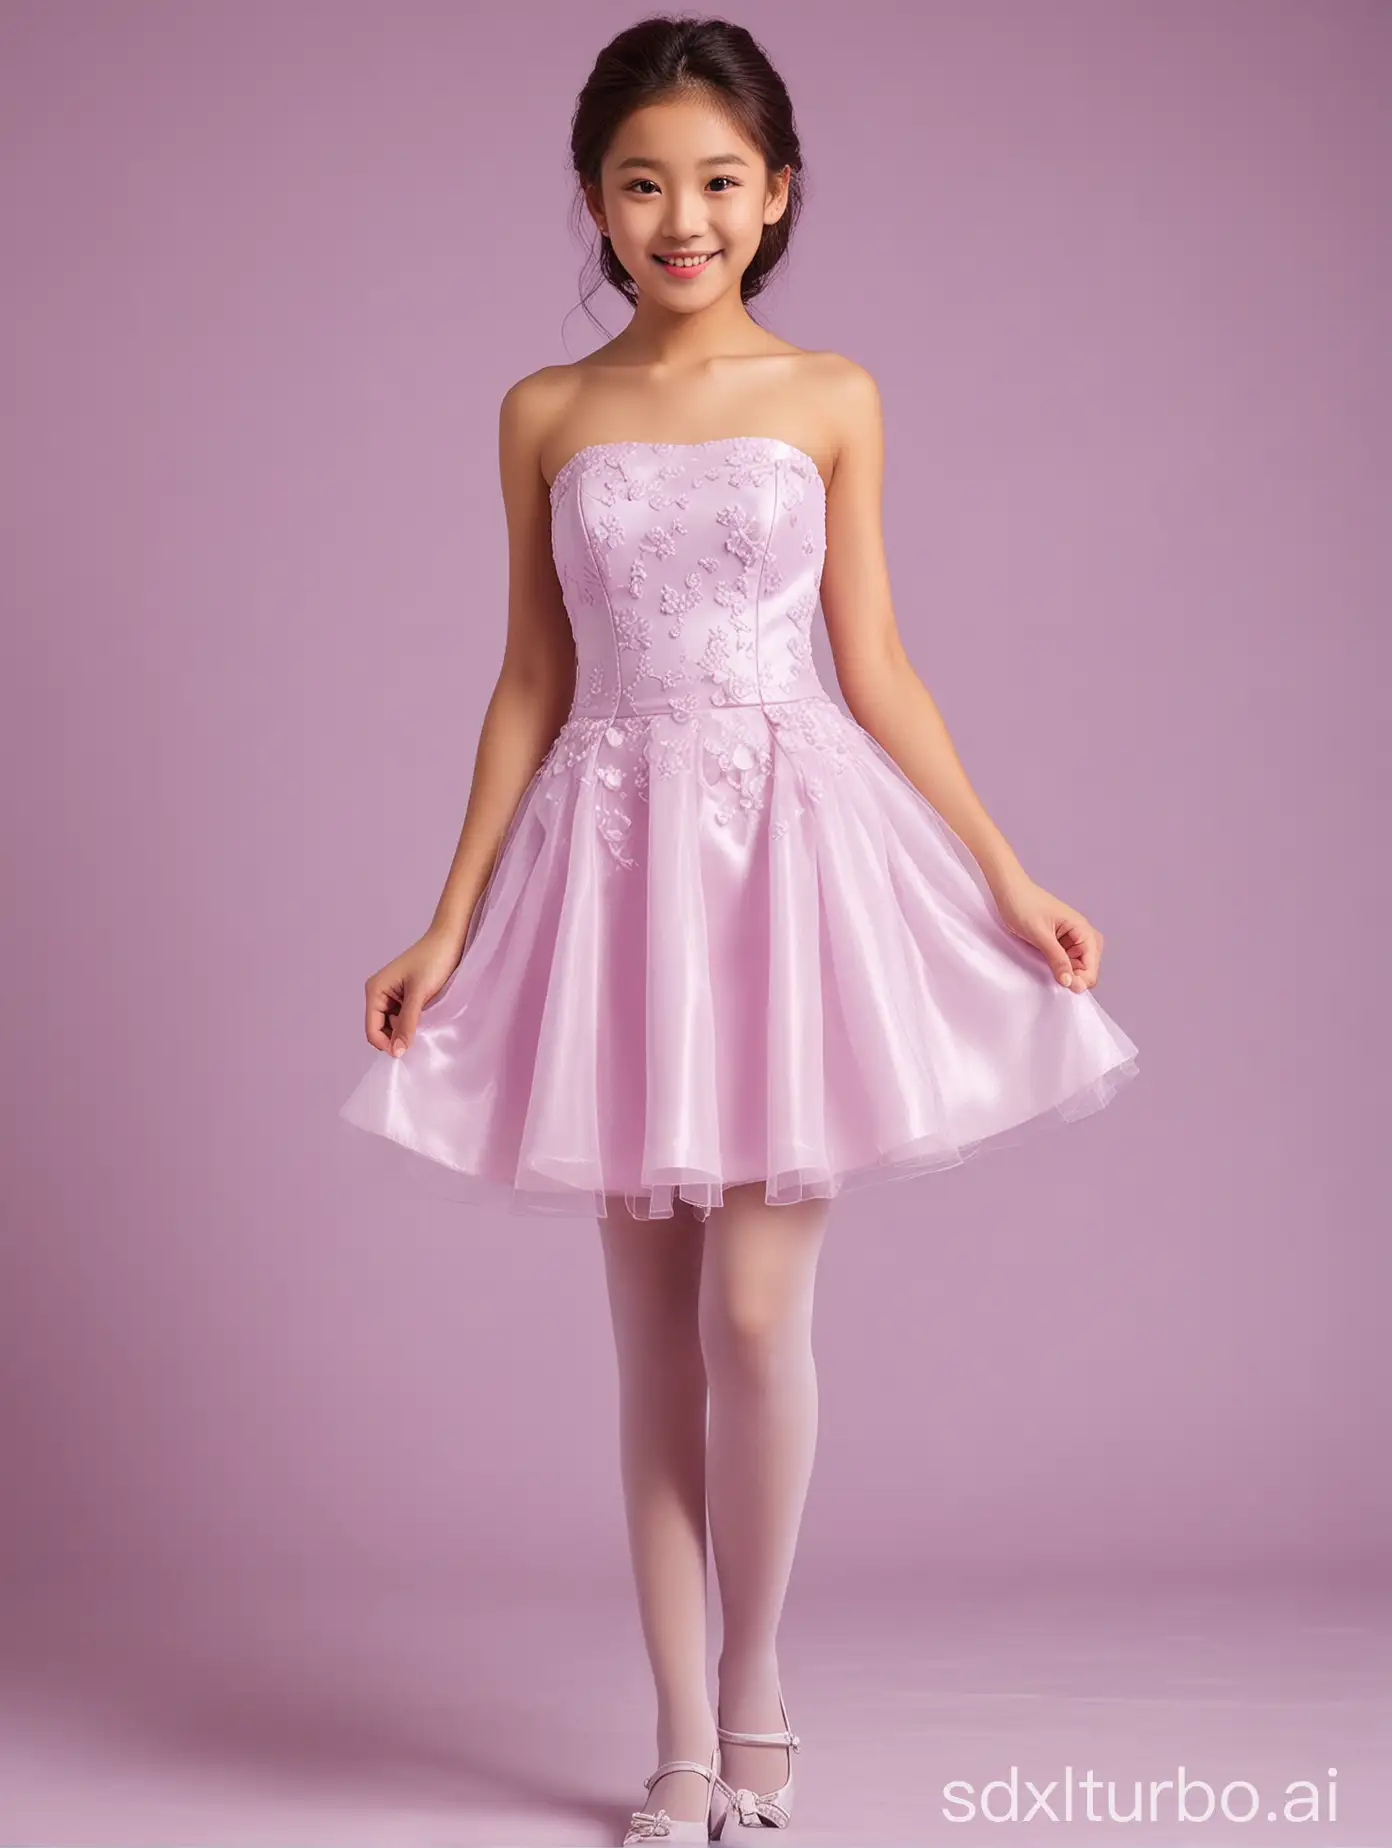 11yo,1girl,Japanese,light violet strapless short wedding dress,pantyhose,full body